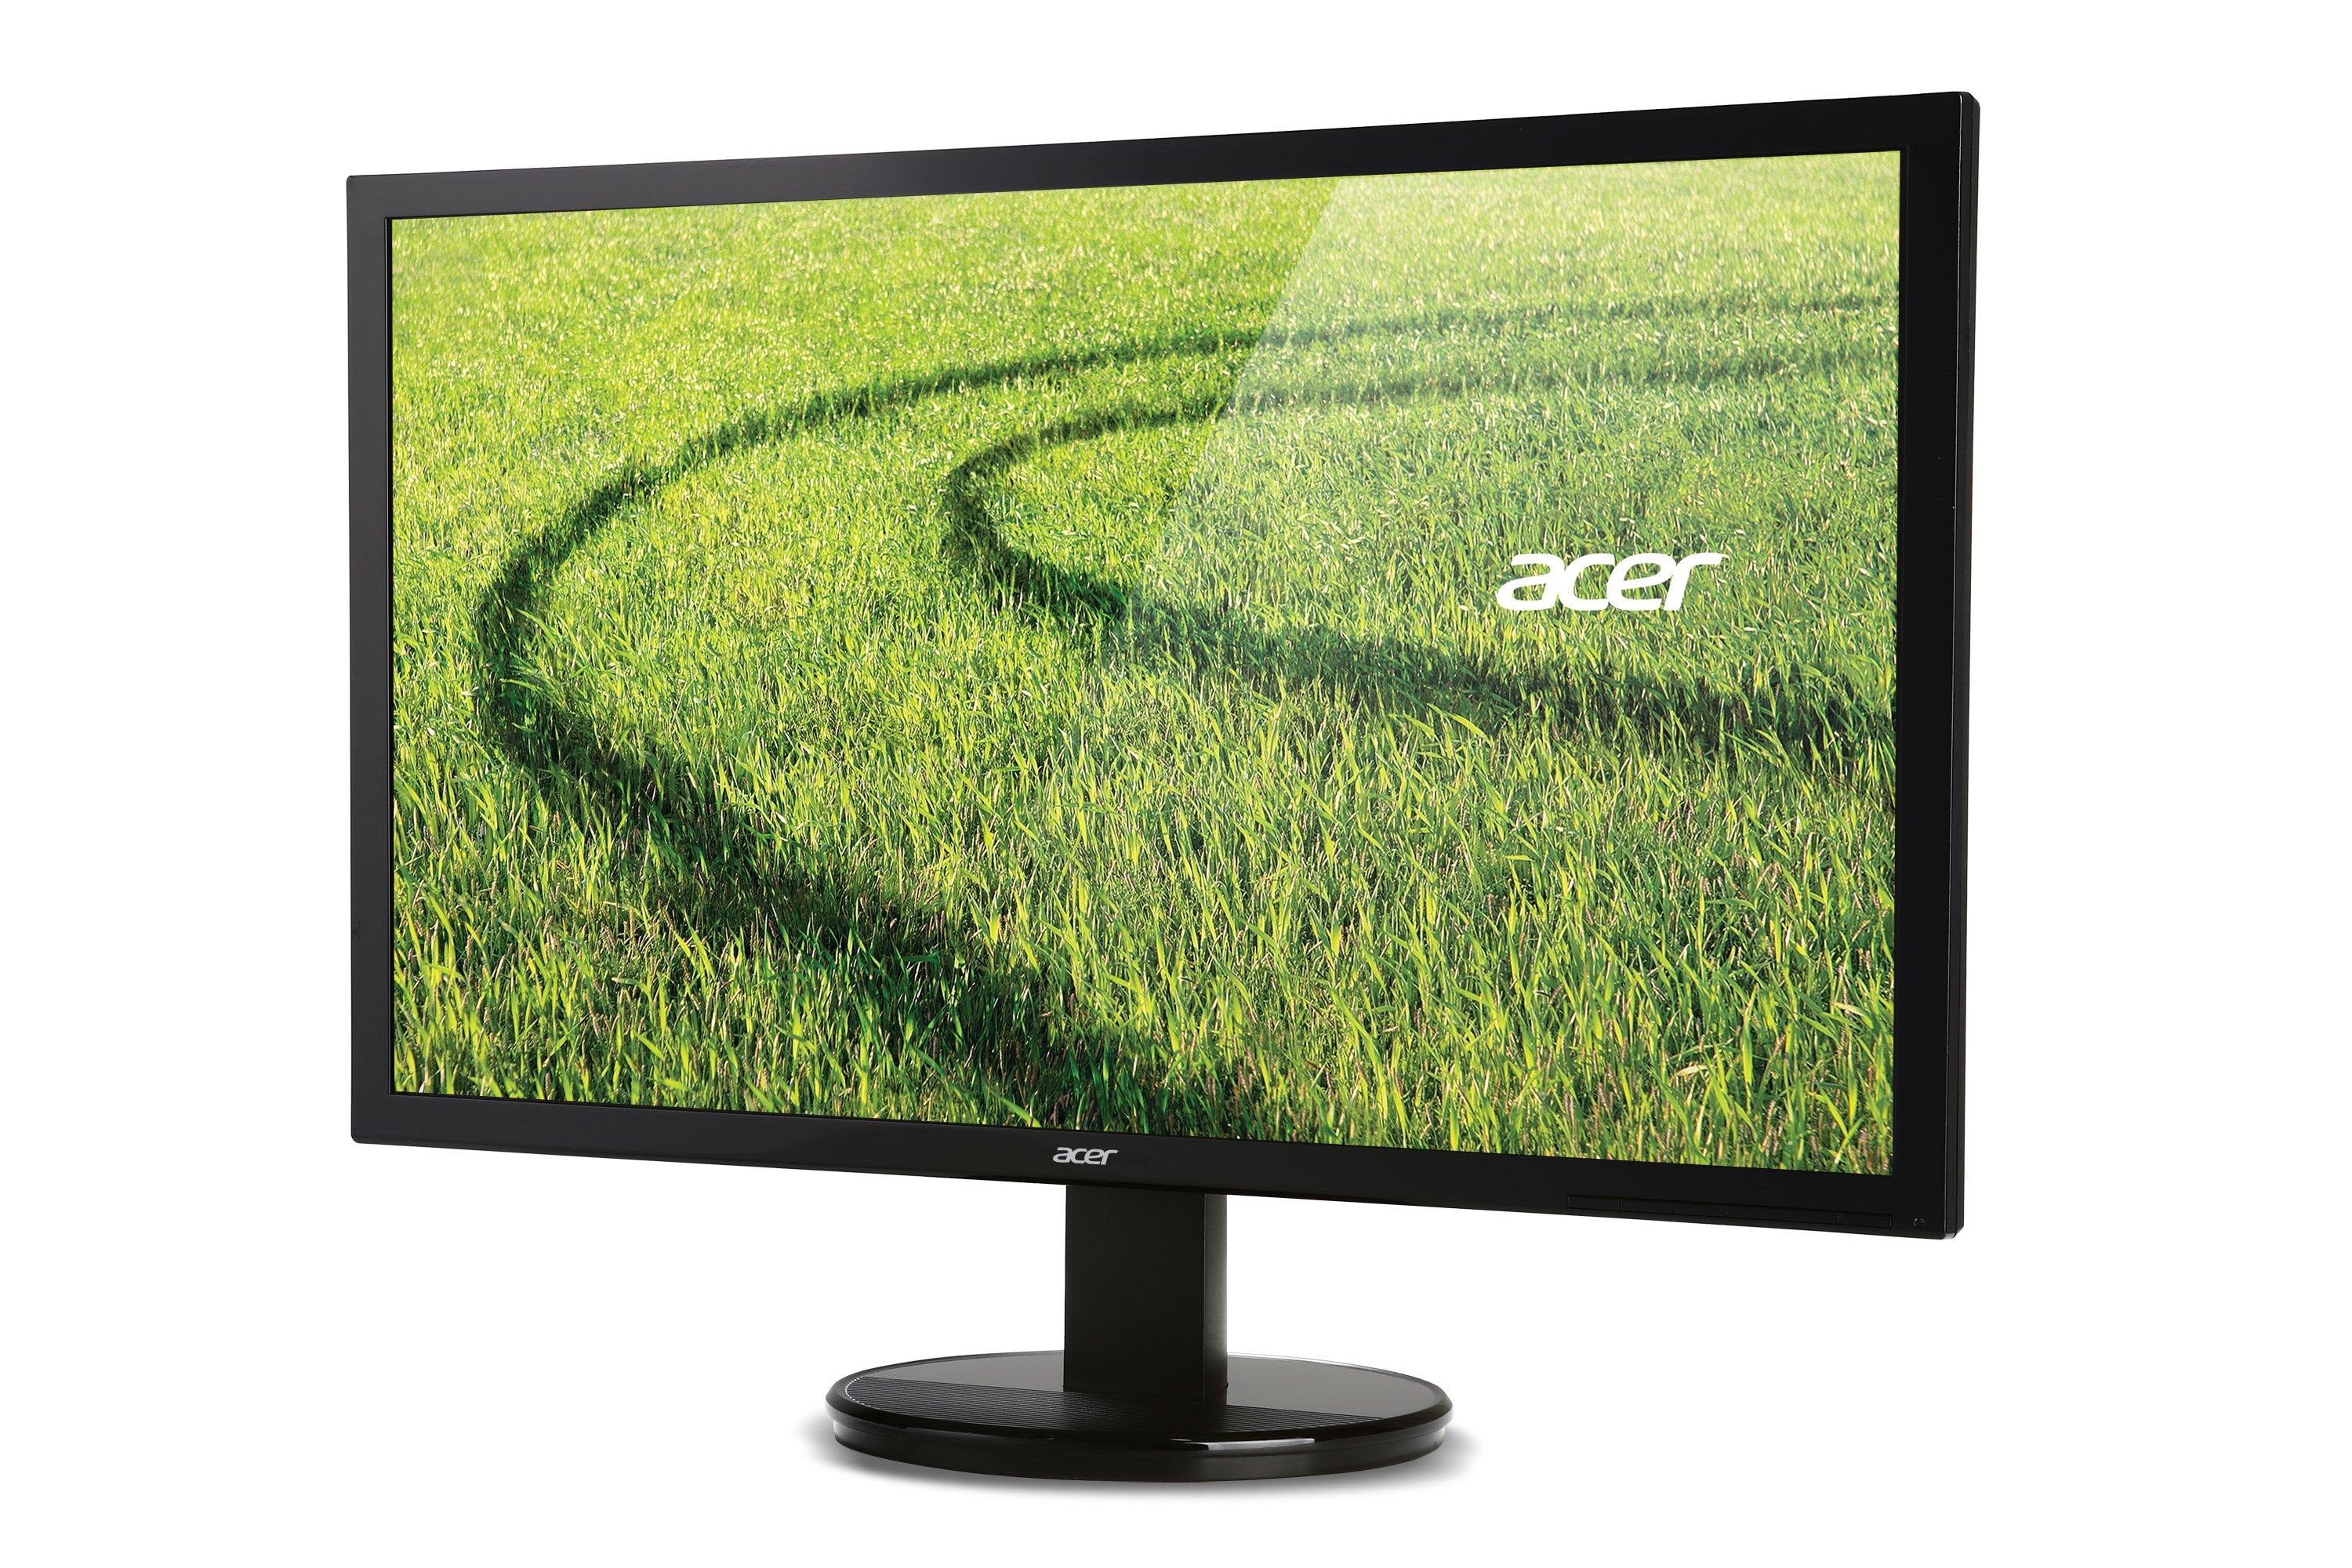 Monitor Acer K2 k242hl k242hlbd 24 pc sobremesa series full hd um.fw3ee.001 6096cm led 24“ k242